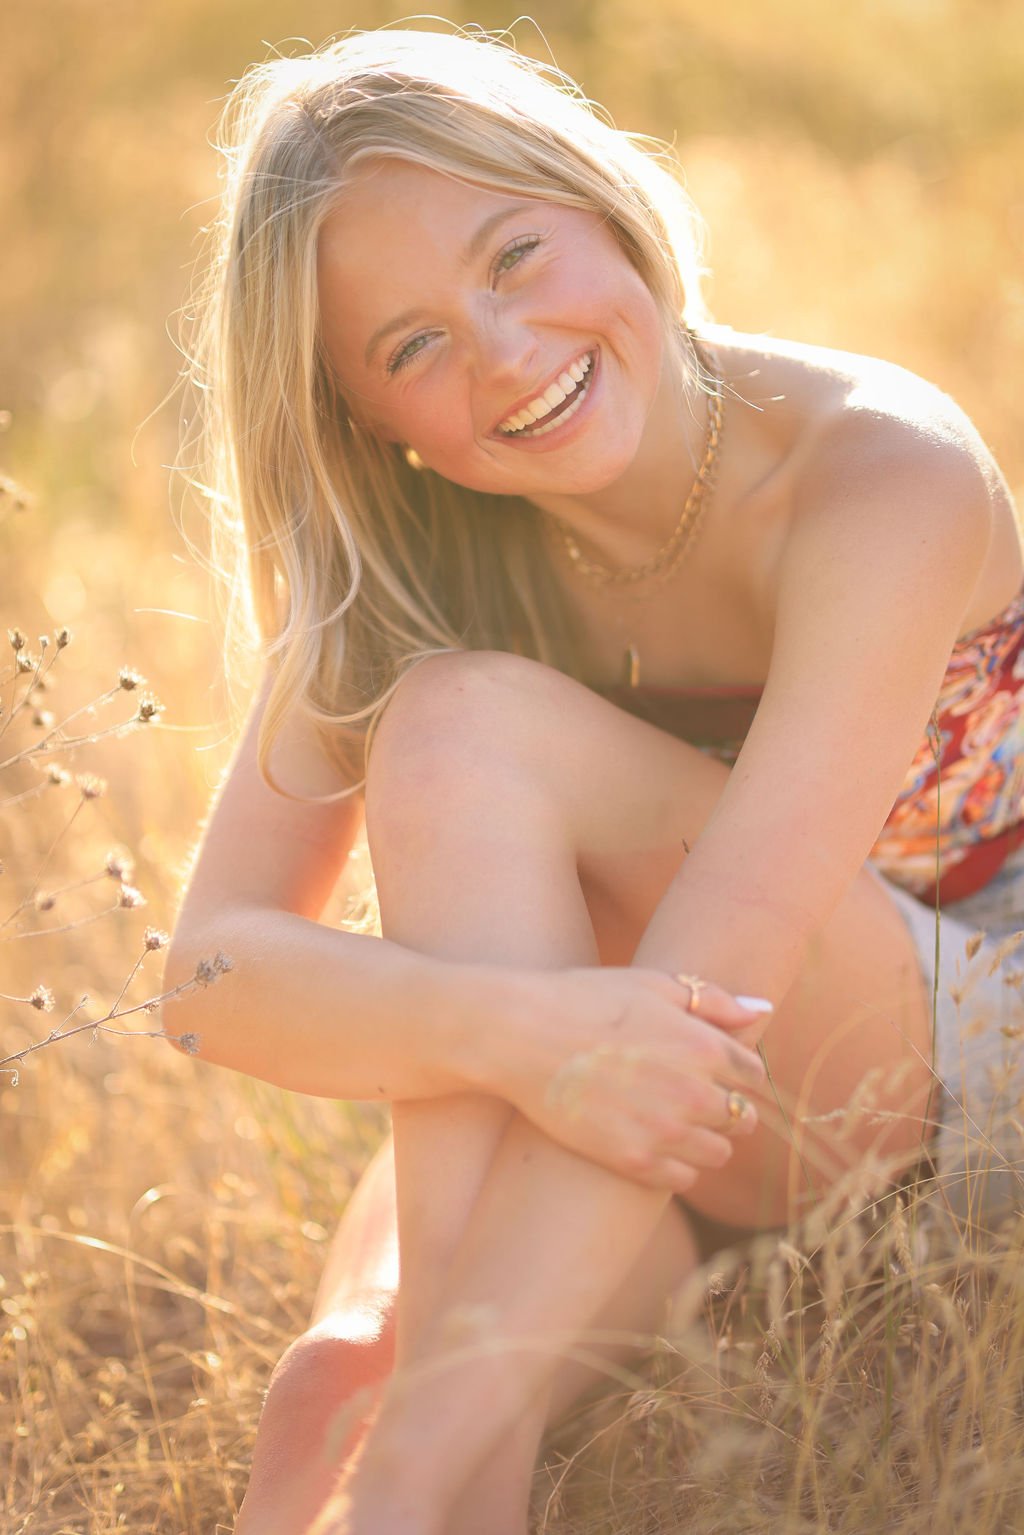 Gorgeous high school senior portrait of girl laughing at golden hour in Montana field.jpg